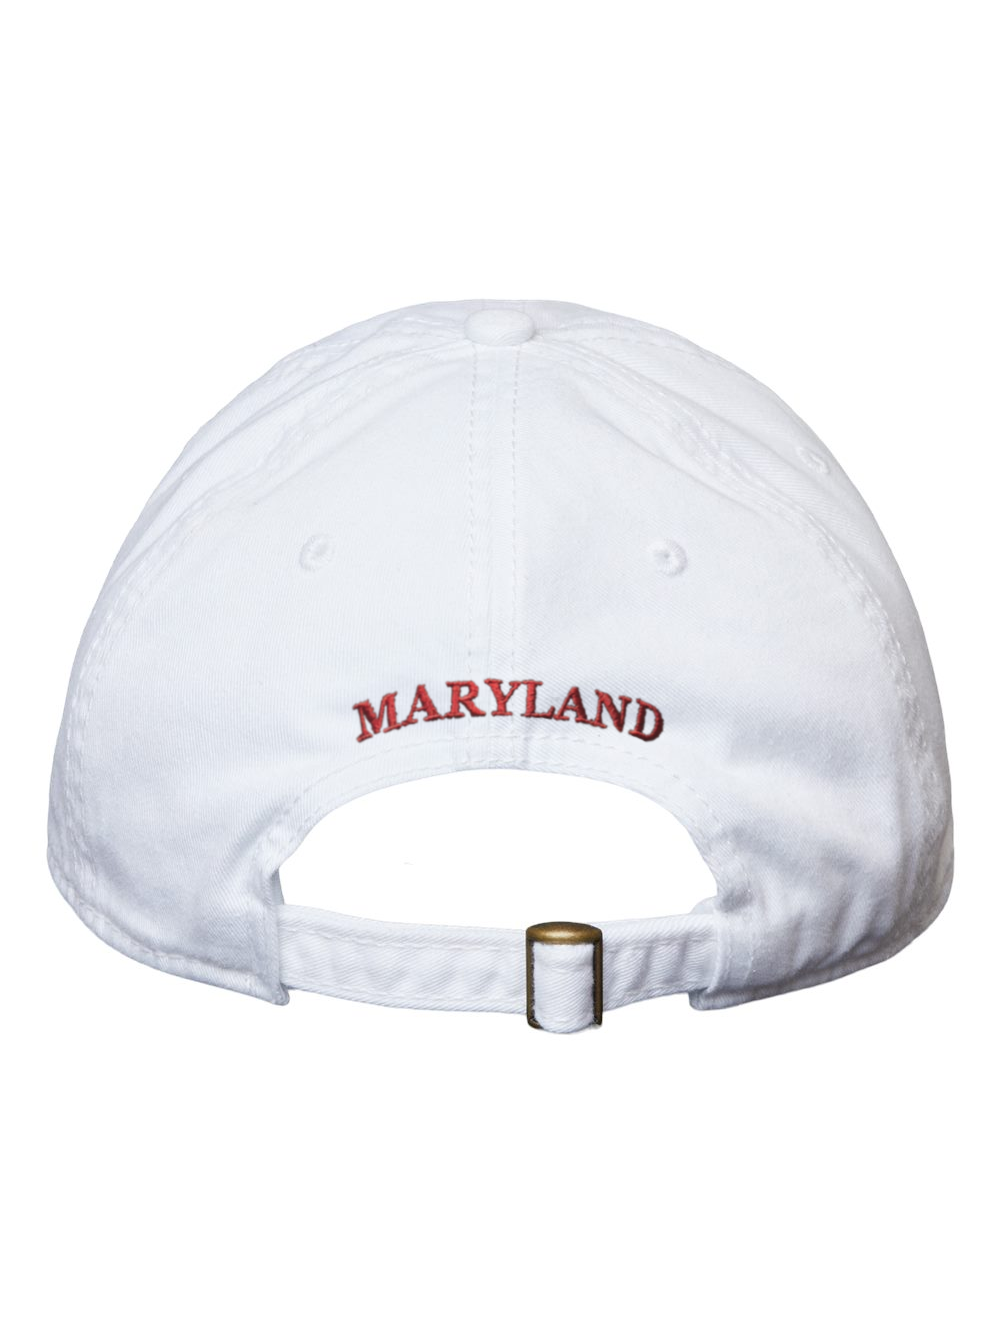 Maryland Crab Embroidered Baseball Cap (White)